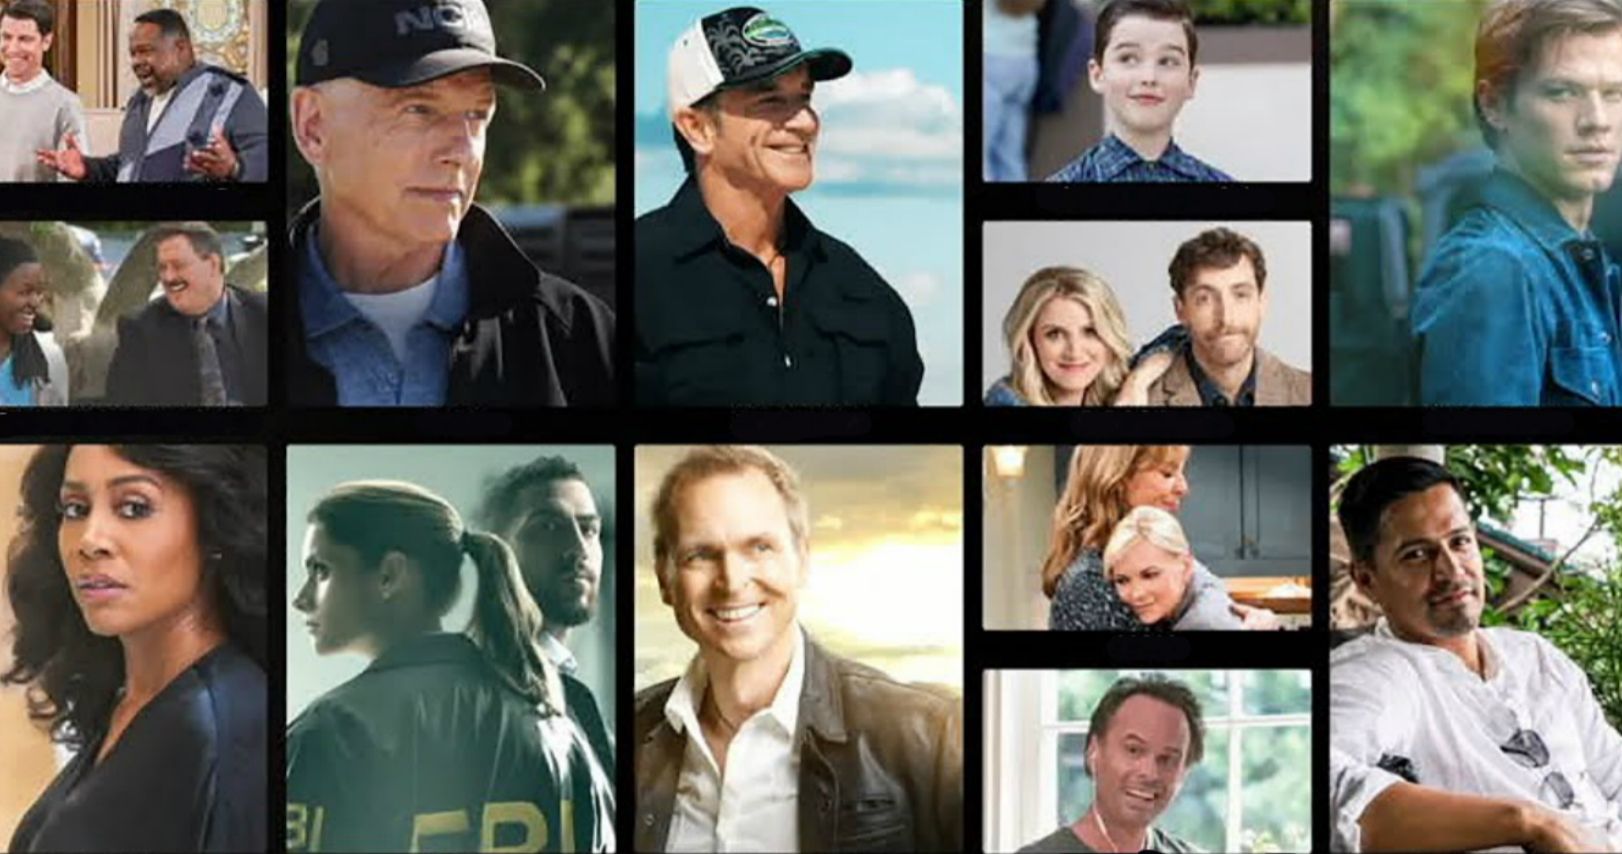 CBS Fall 2020 Schedule Announced, Goes Heavy on Scripted Dramas Despite Shutdown